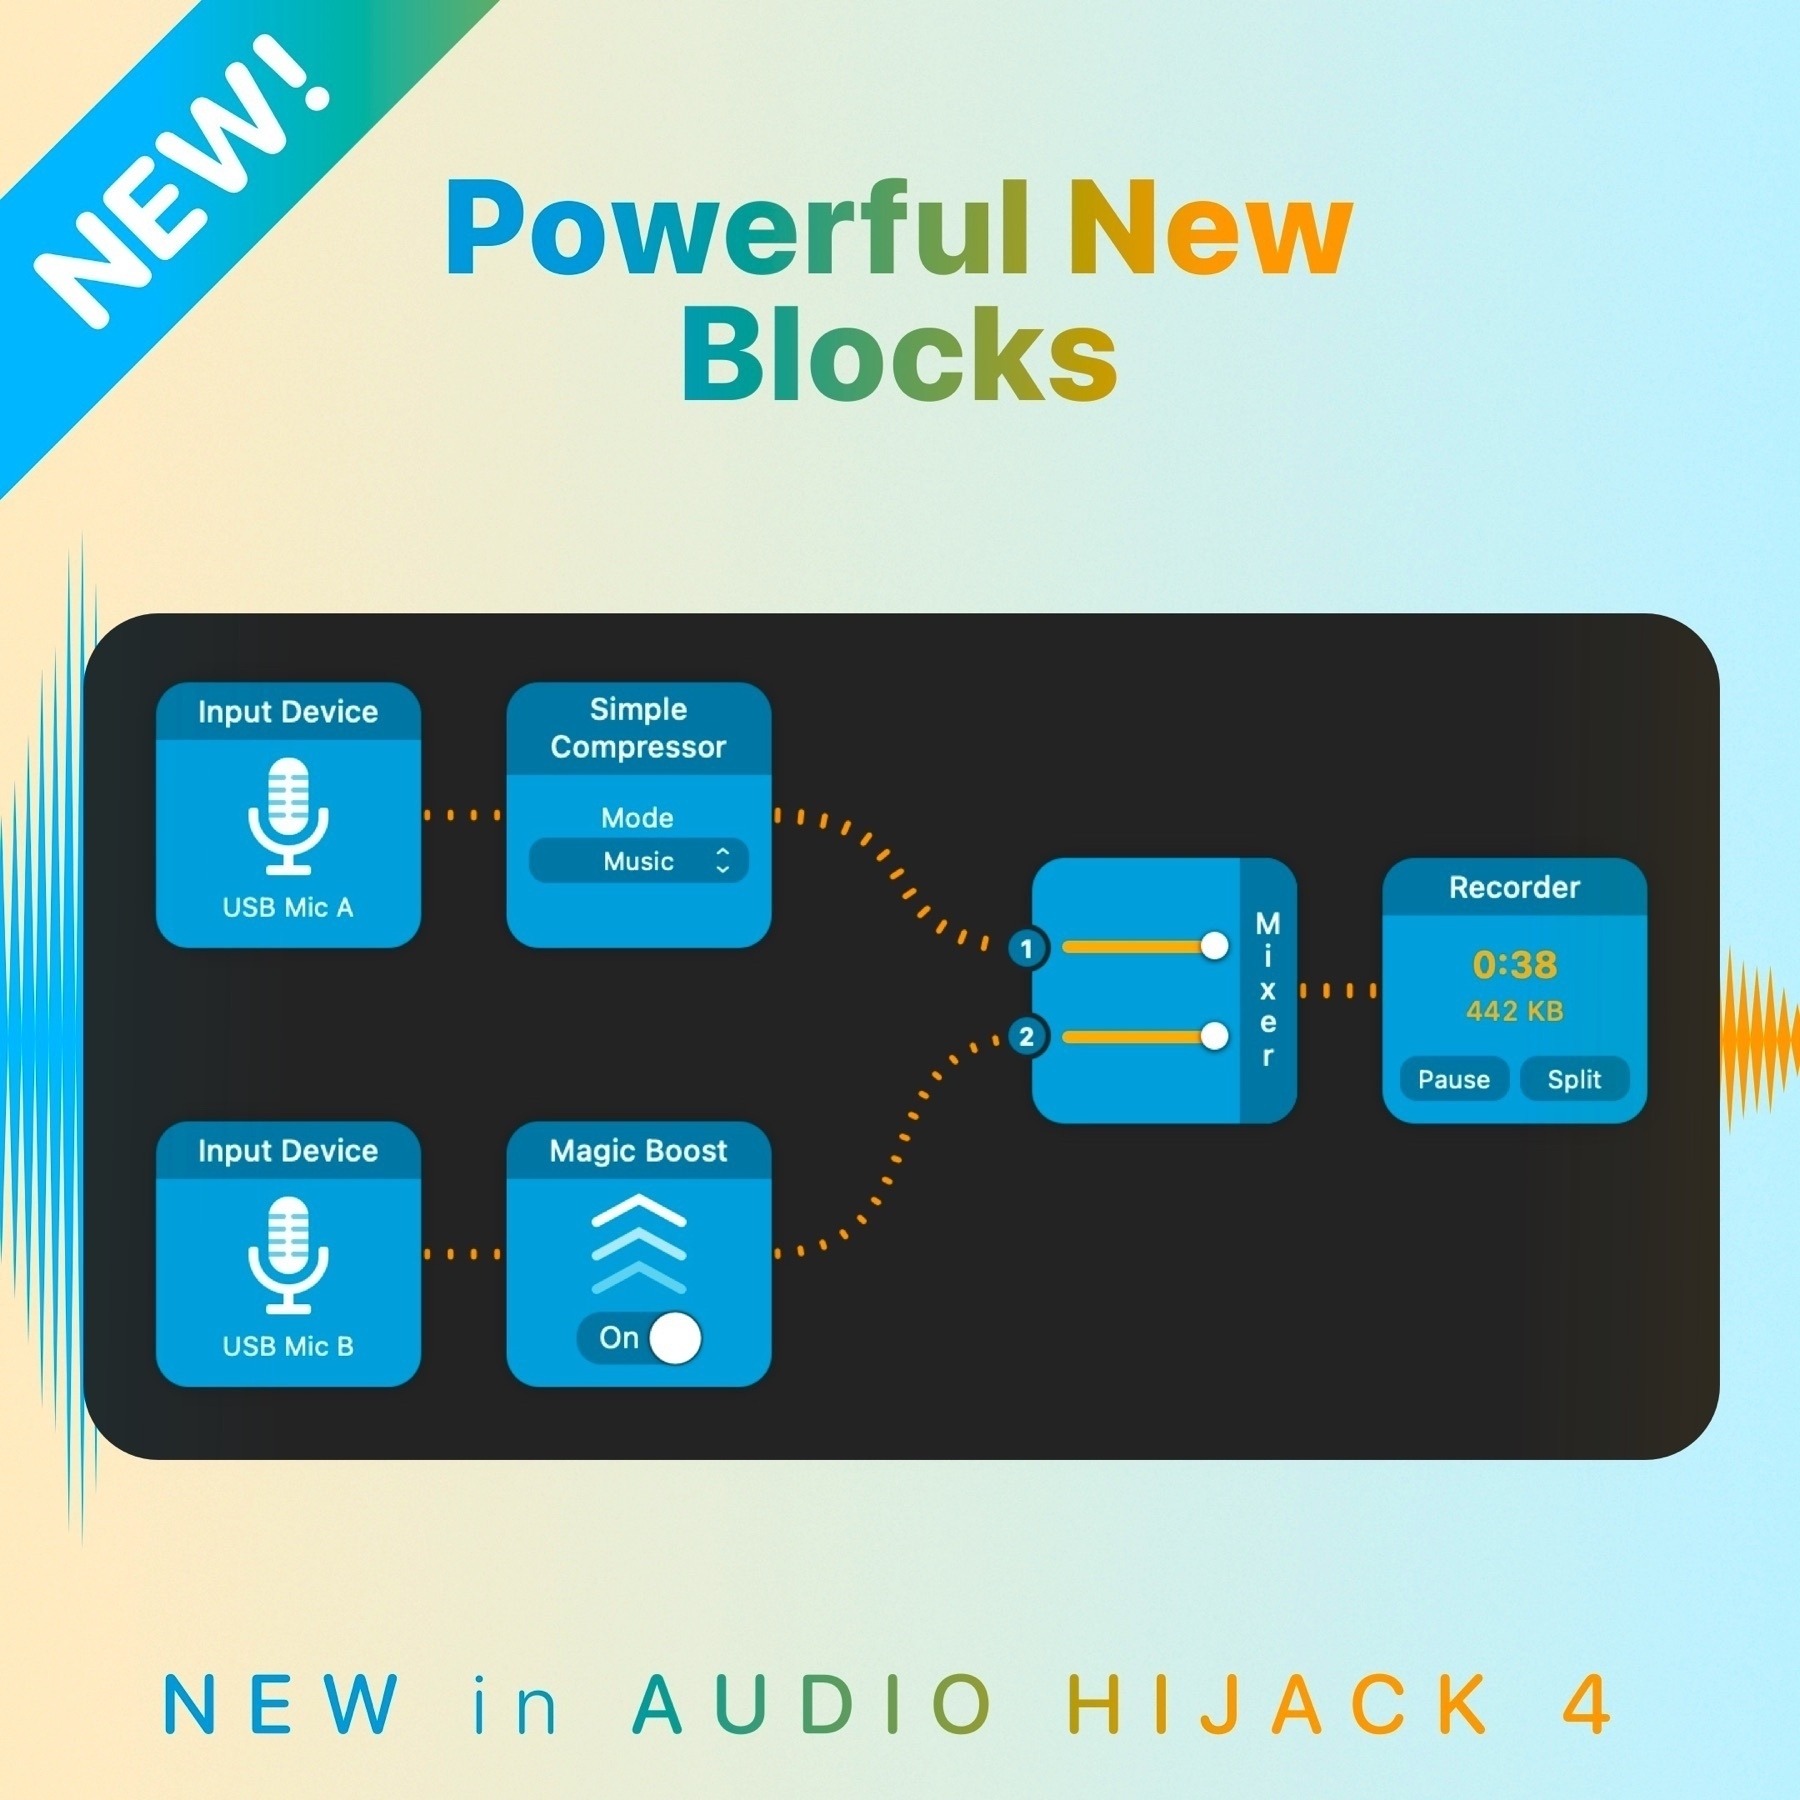 Audio Hijack 4 screenshot showing the new Simple Compressor, Magic Boost, and Mixer blocks.